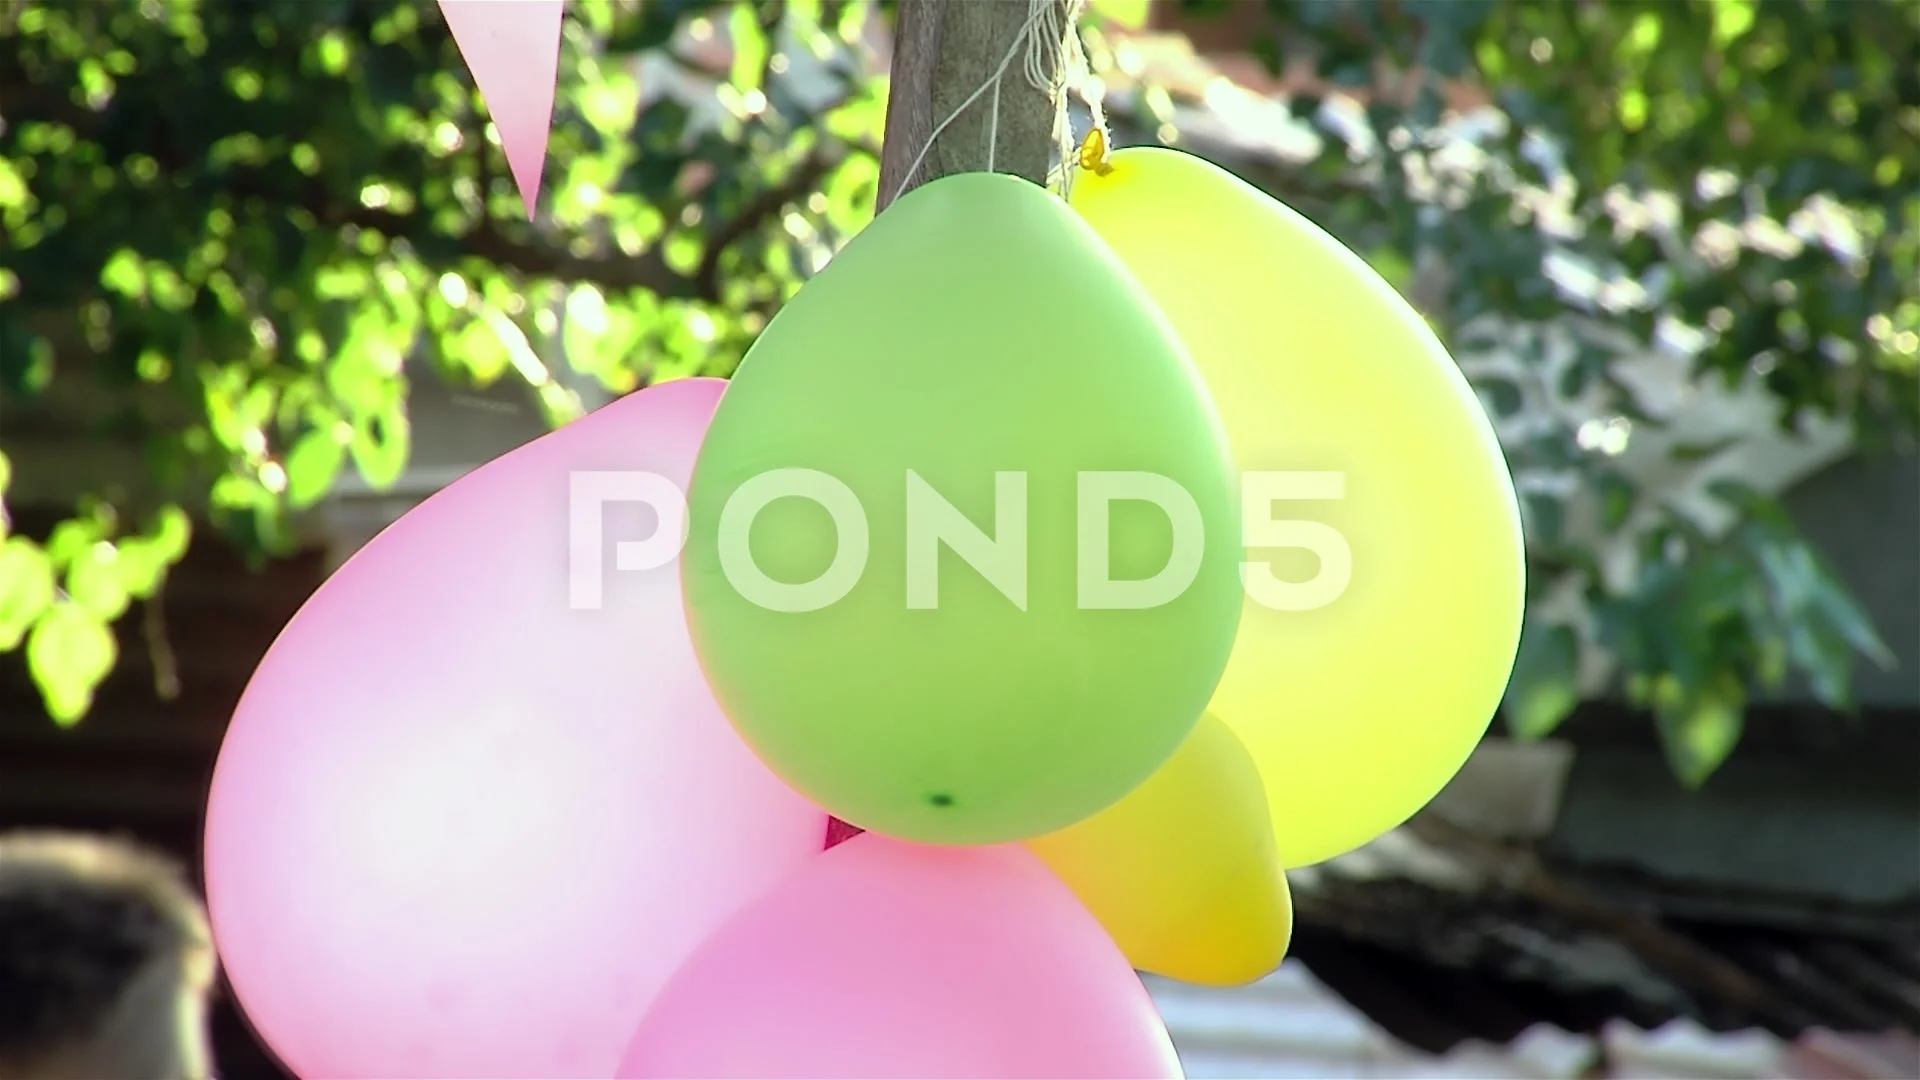 https://images.pond5.com/string-balloons-hanging-between-trees-footage-239850670_prevstill.jpeg